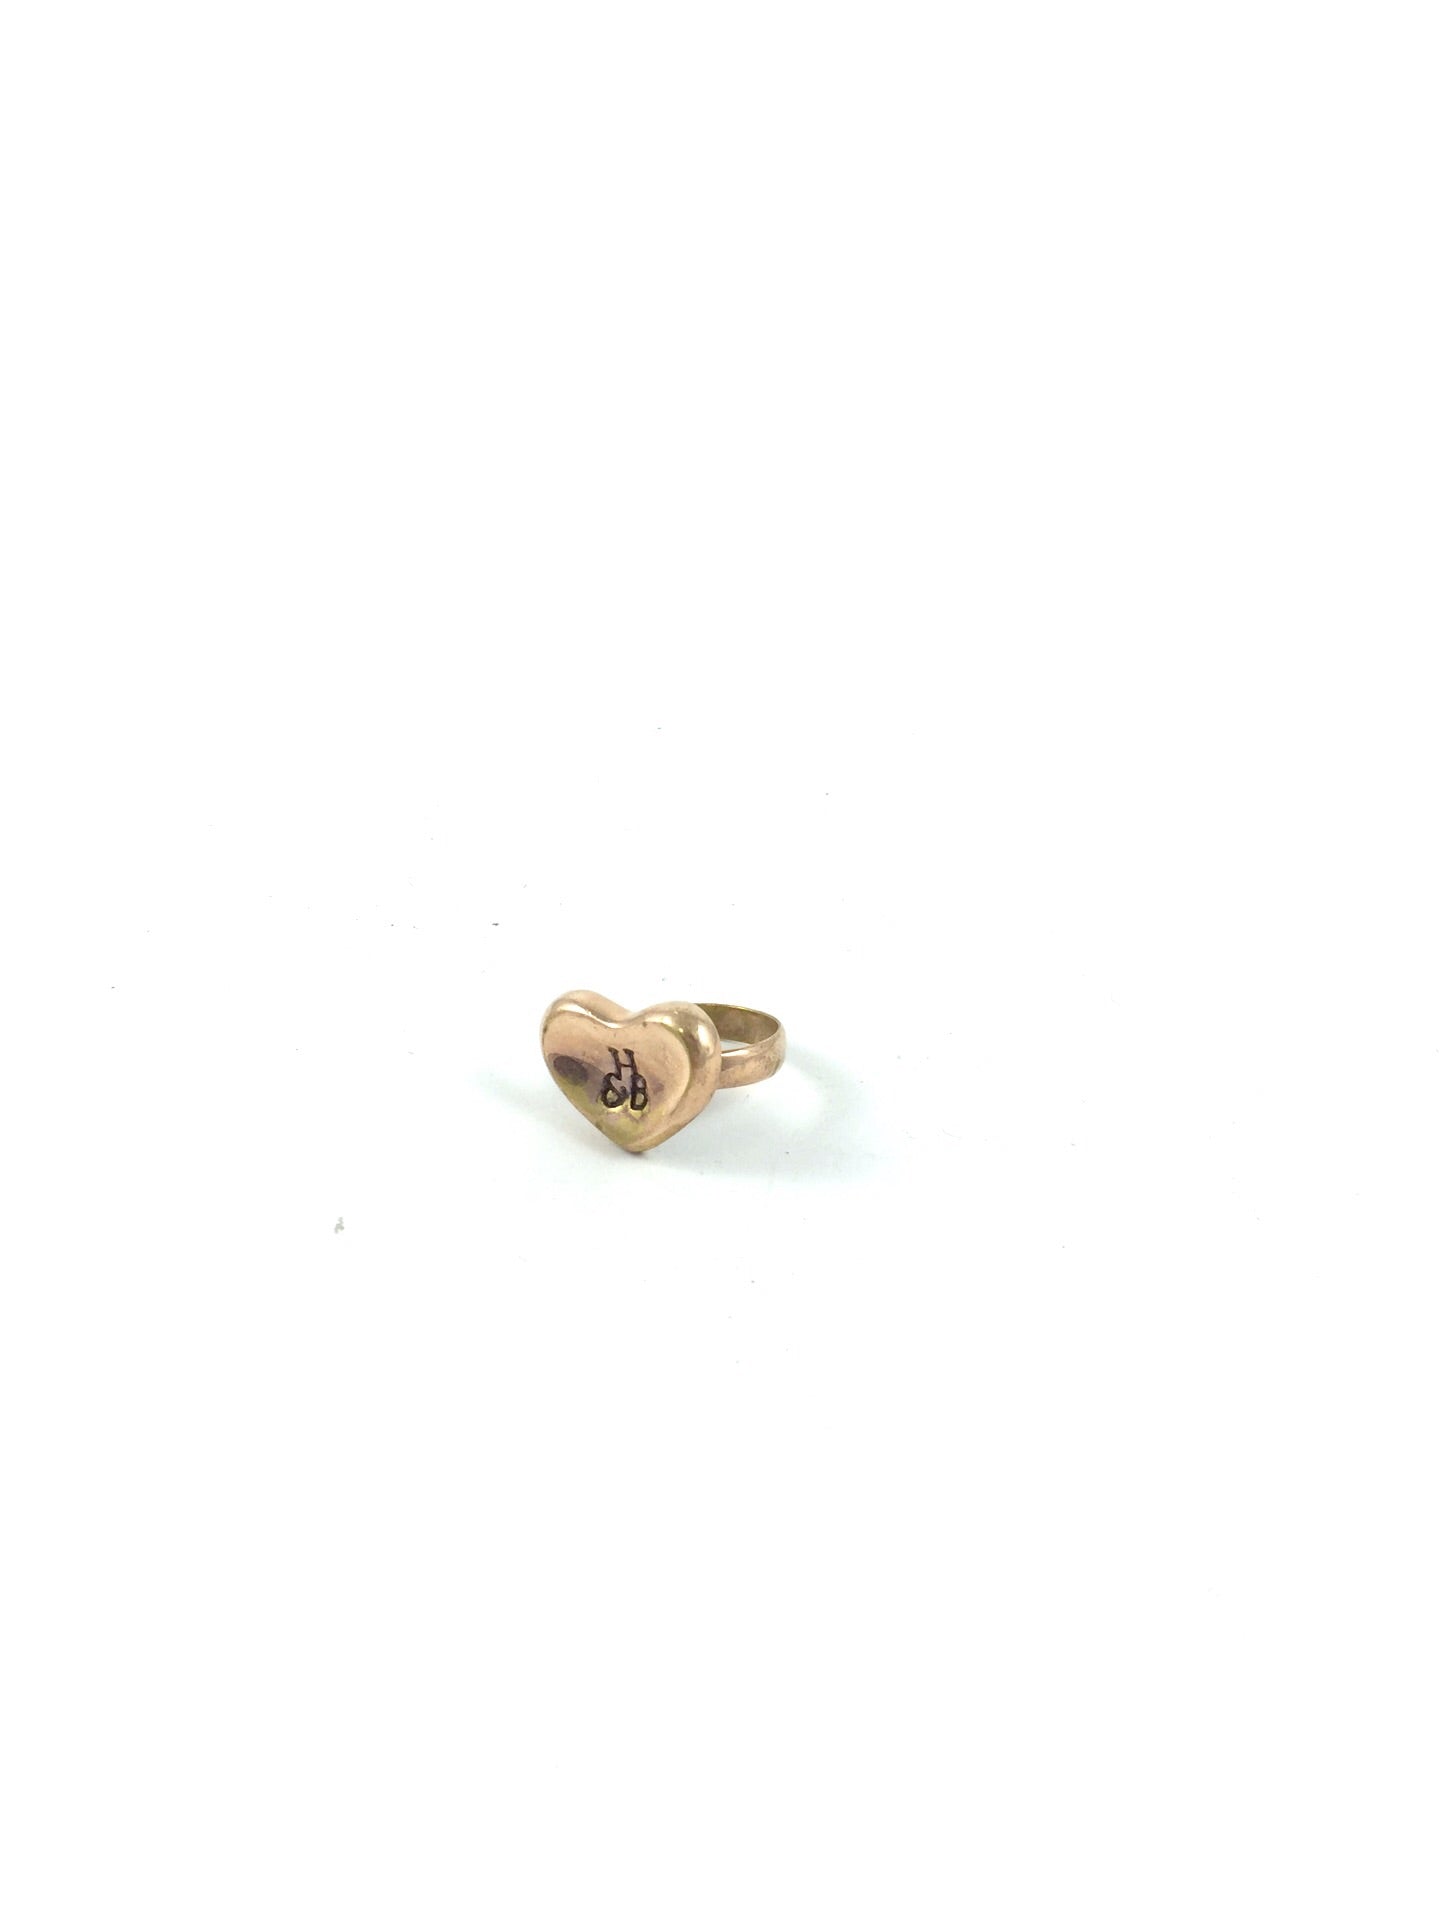 Copper Tone Ring